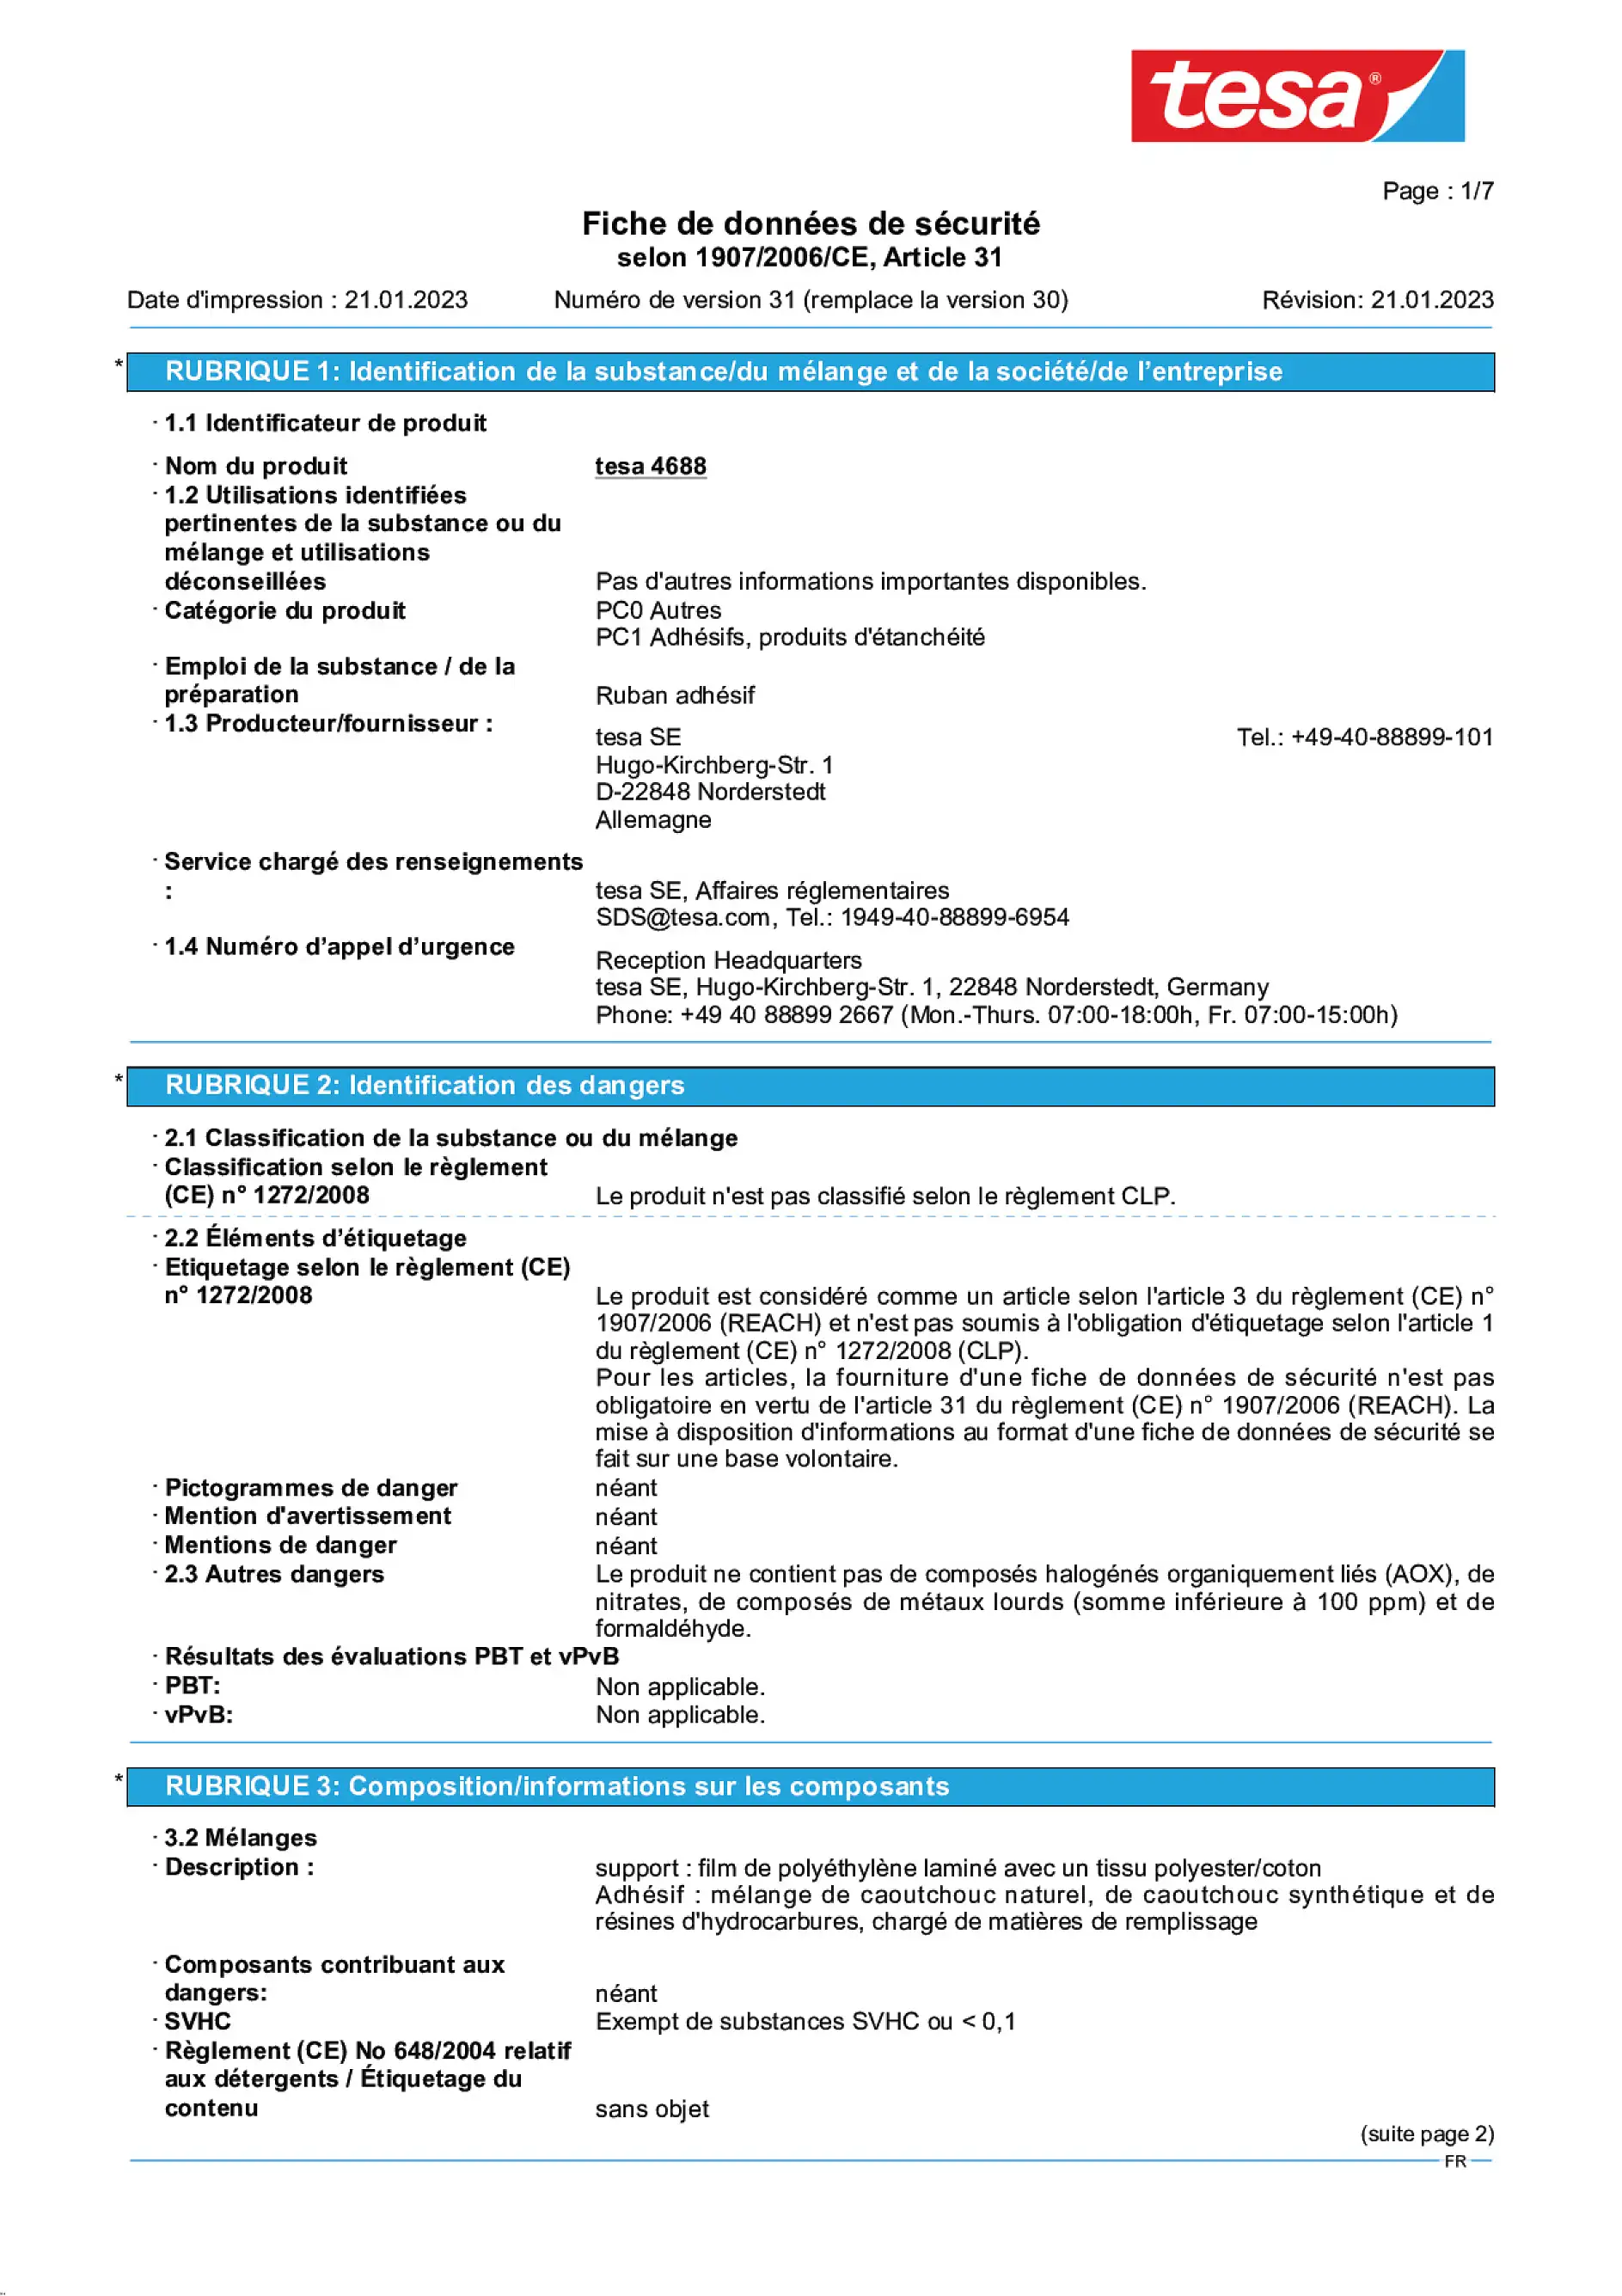 Safety data sheet_tesa® Professional 04688_fr-FR_v31